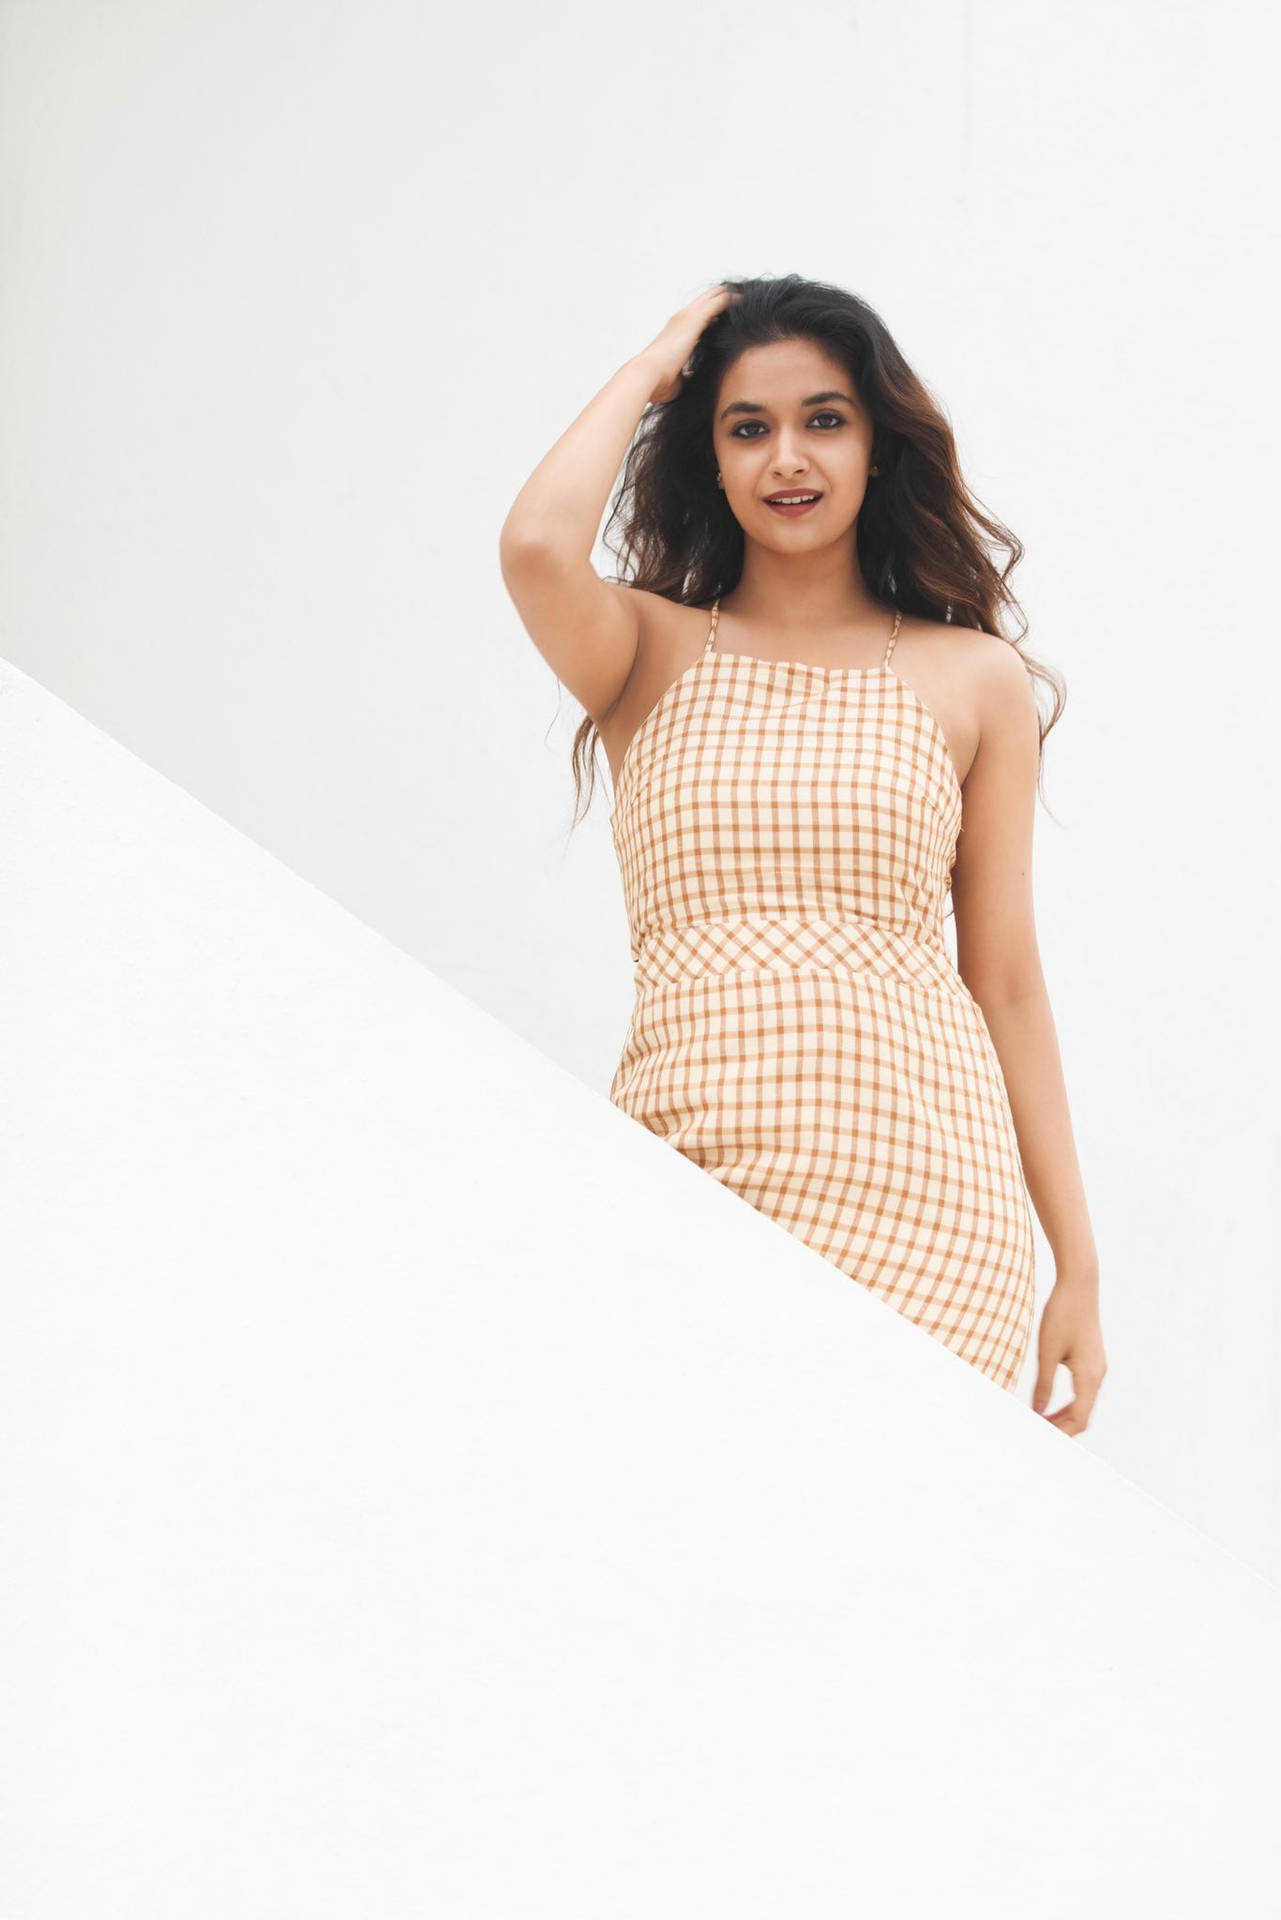 Keerthi Suresh Checkered Dress Background